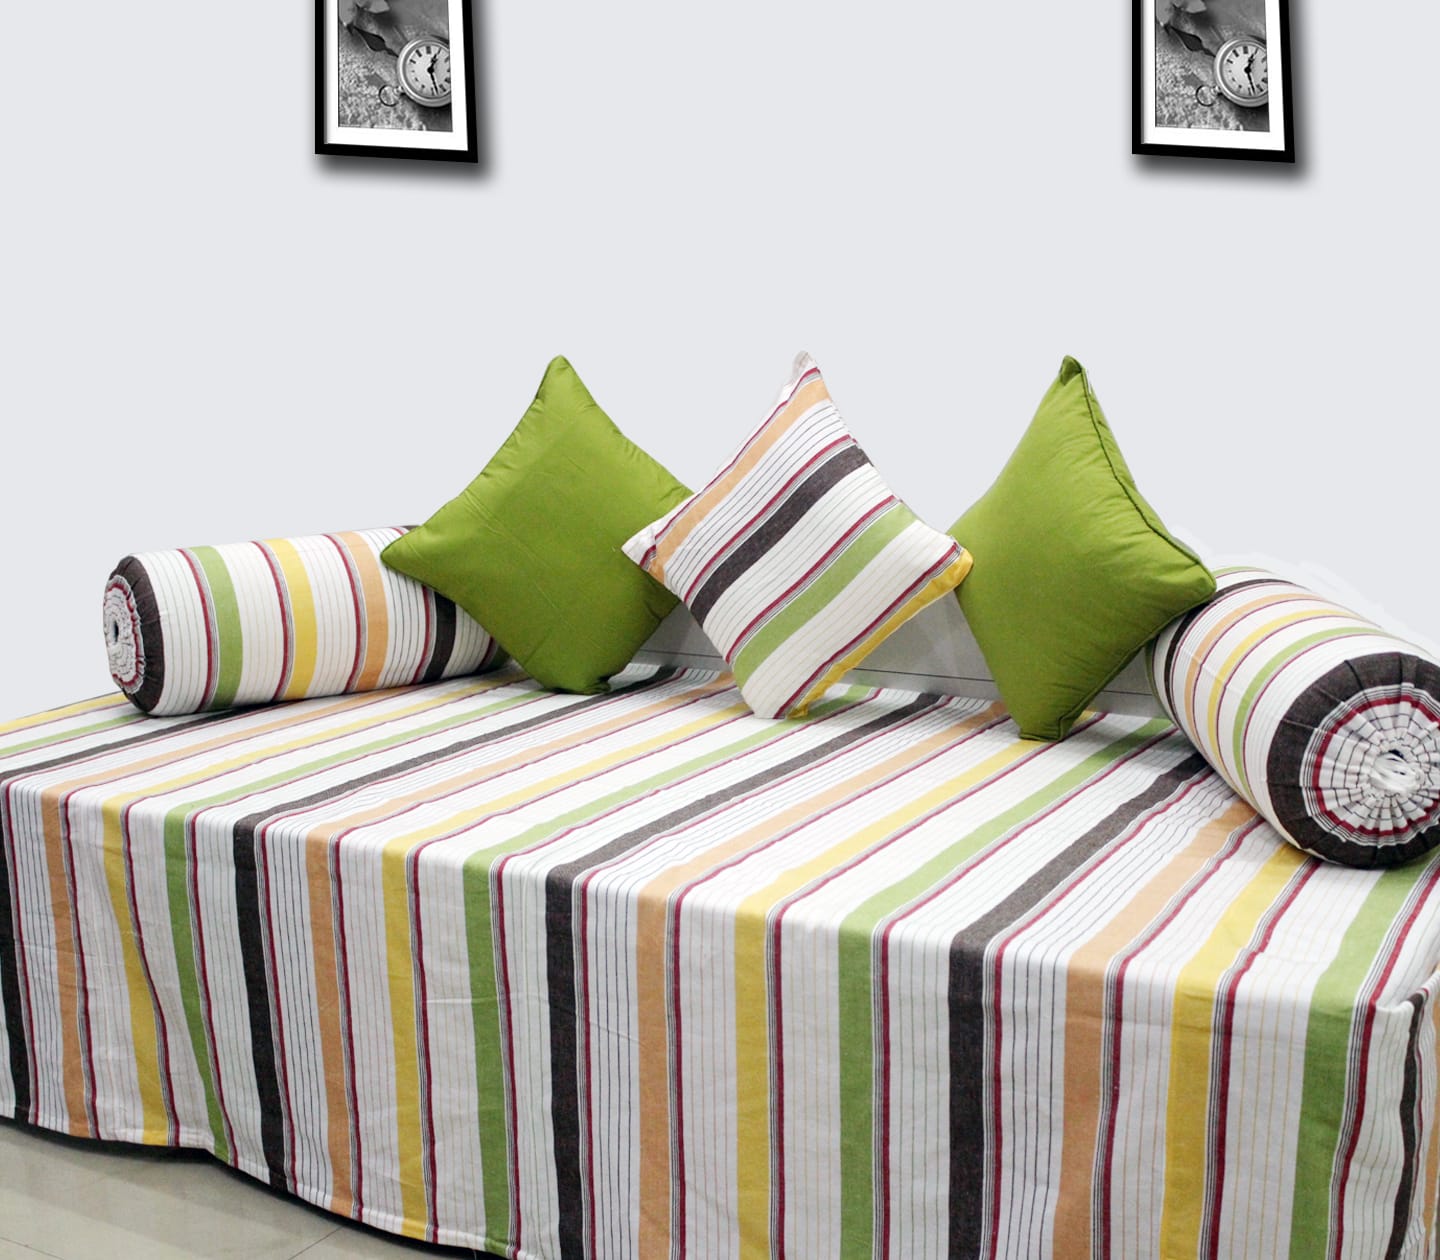 Soft Stripe Print Mercerised Woven Cotton Diwan Set(6 Pcs) online in India